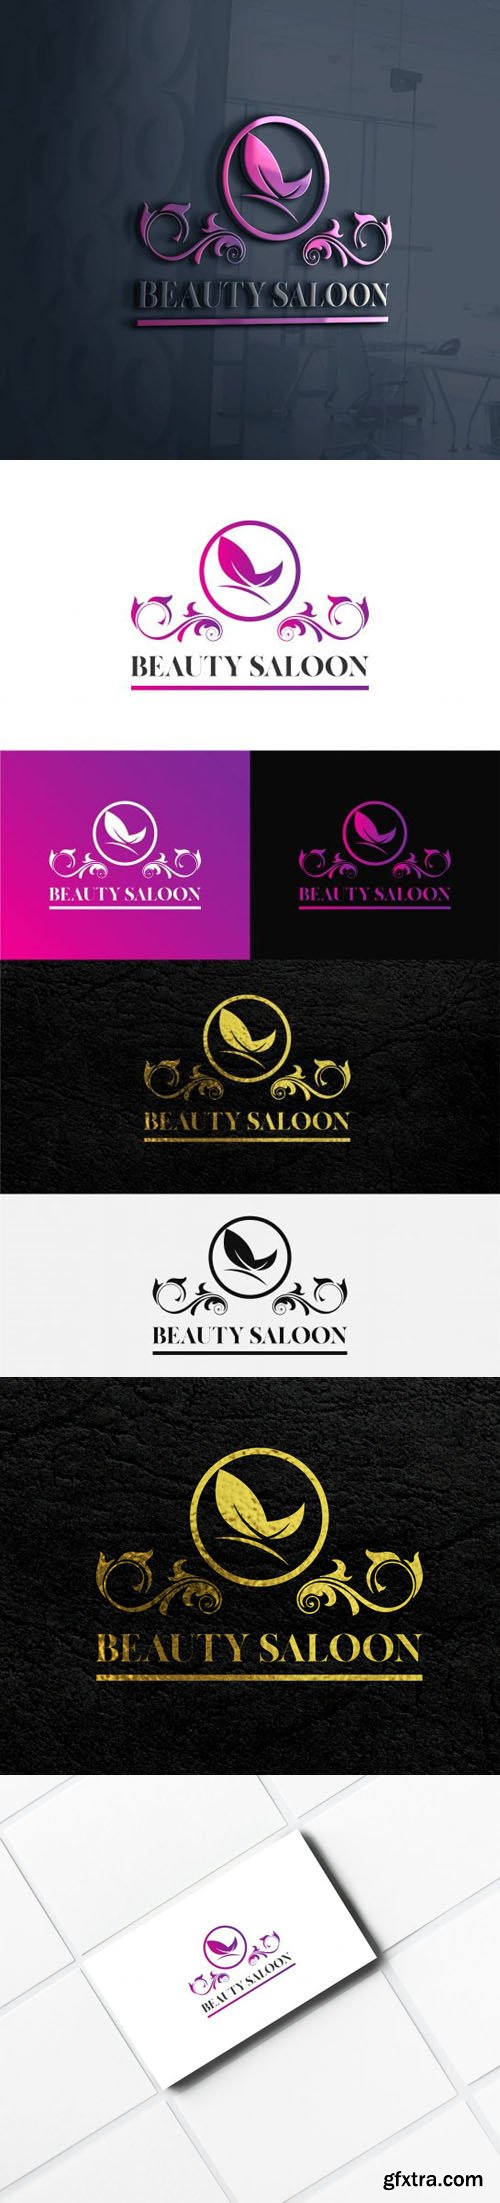 Beauty Saloon Logo Templates for Illustrator